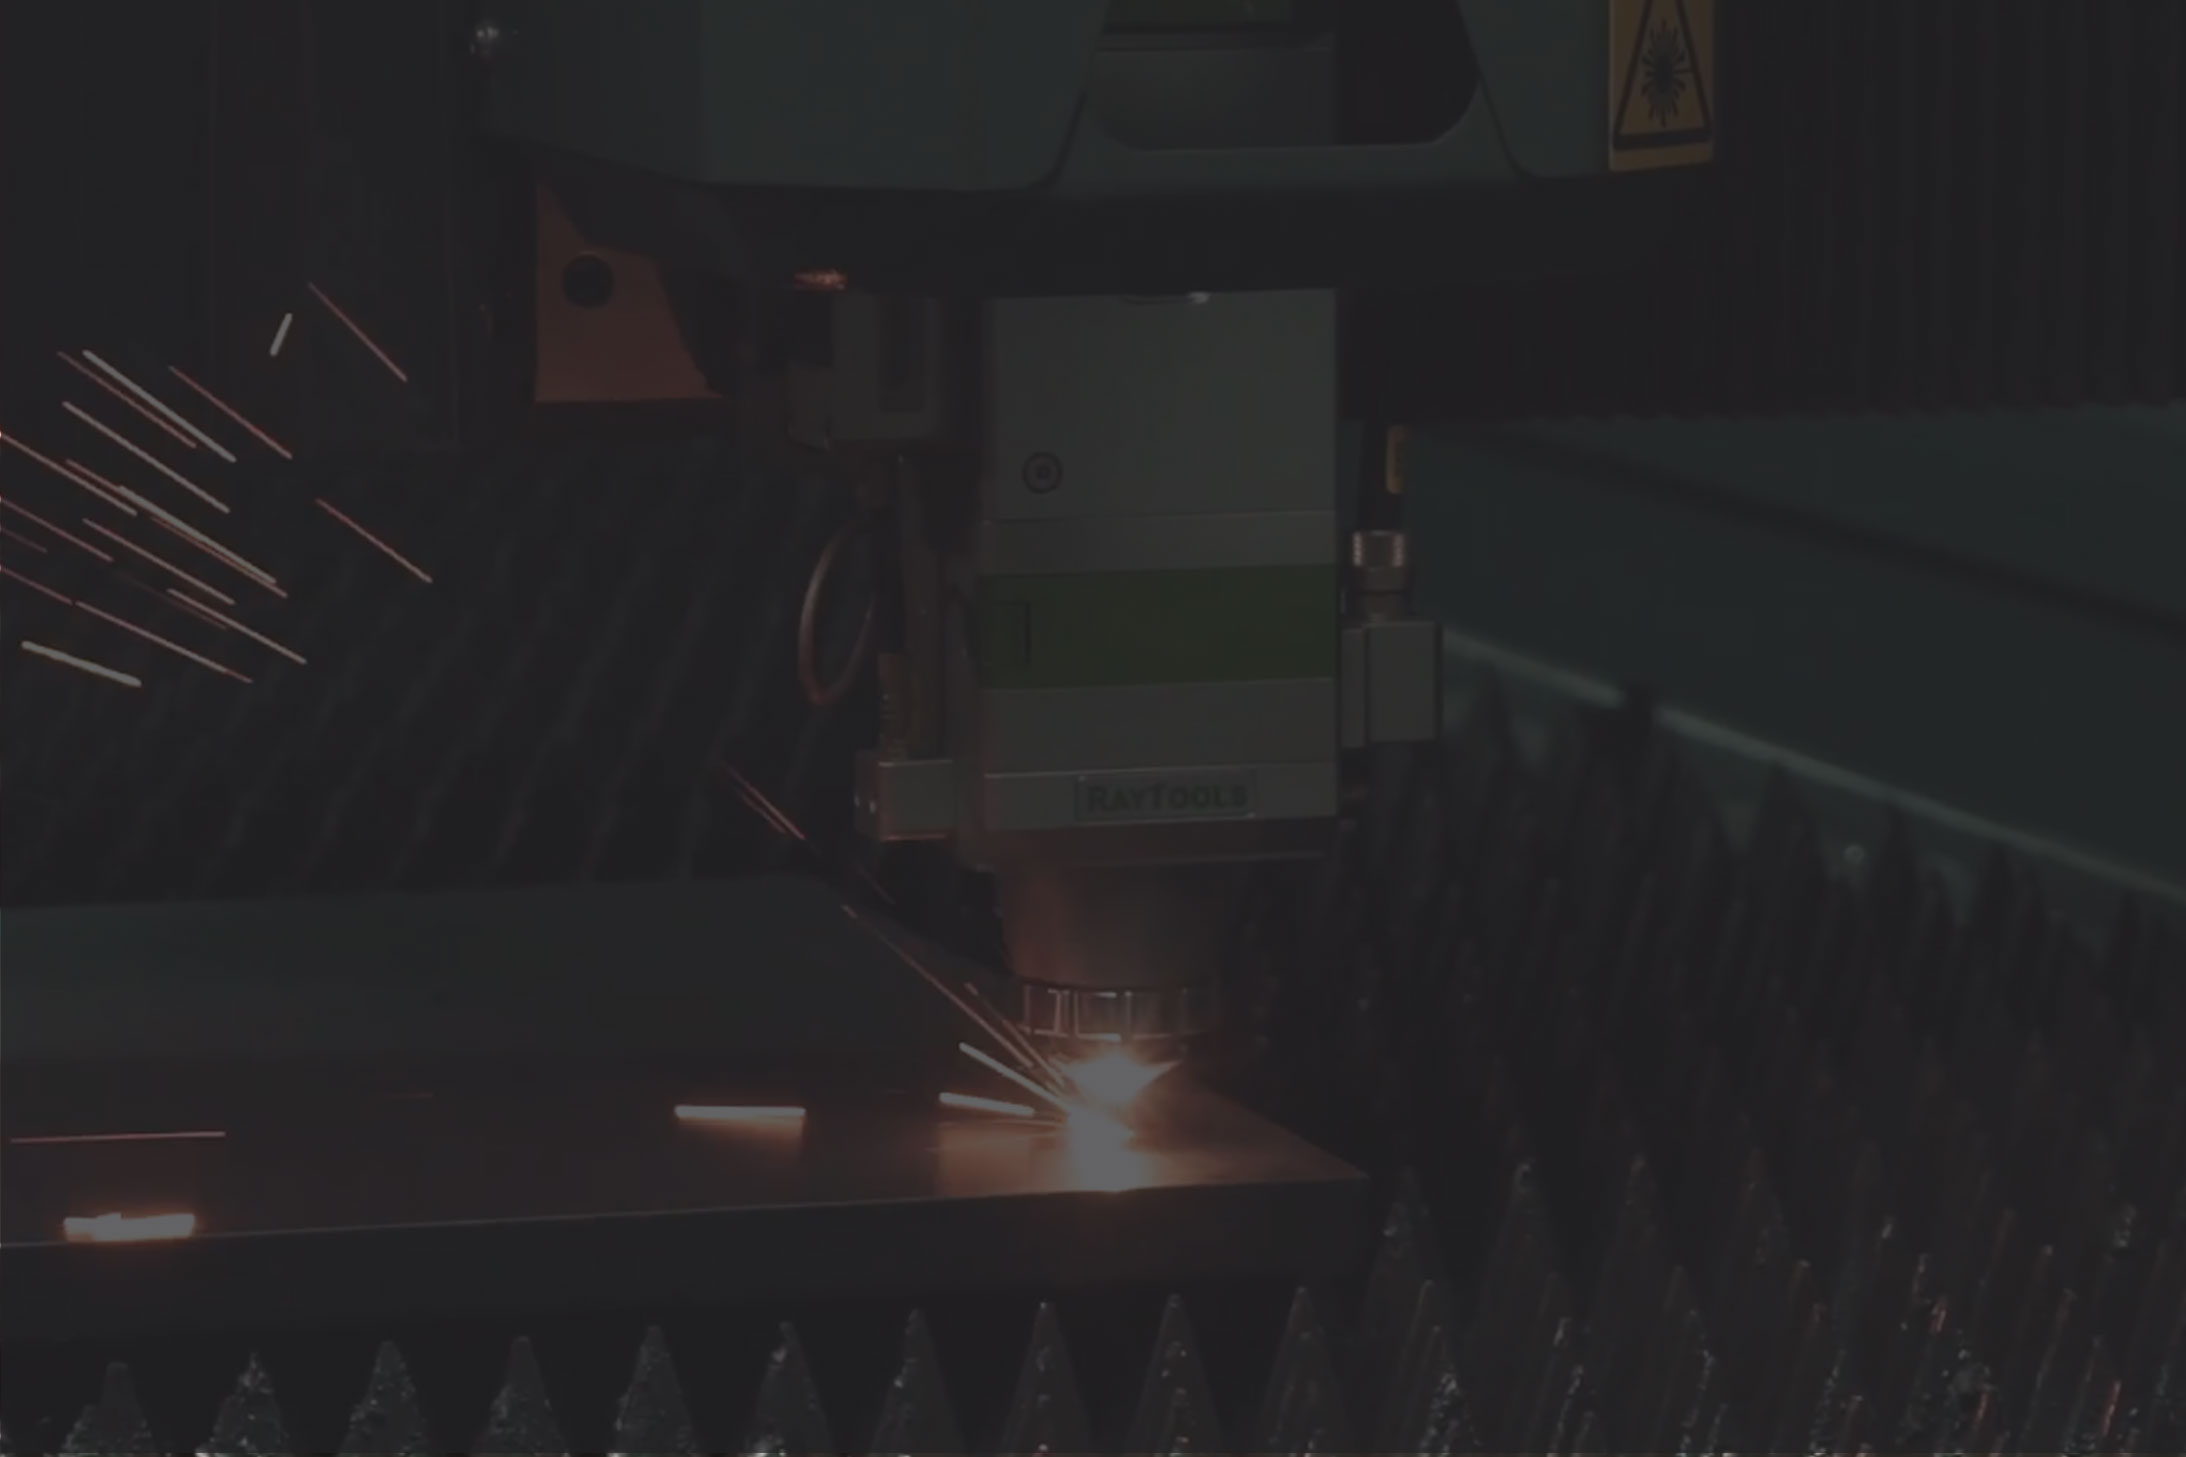 MH Series CNC Fiber Laser